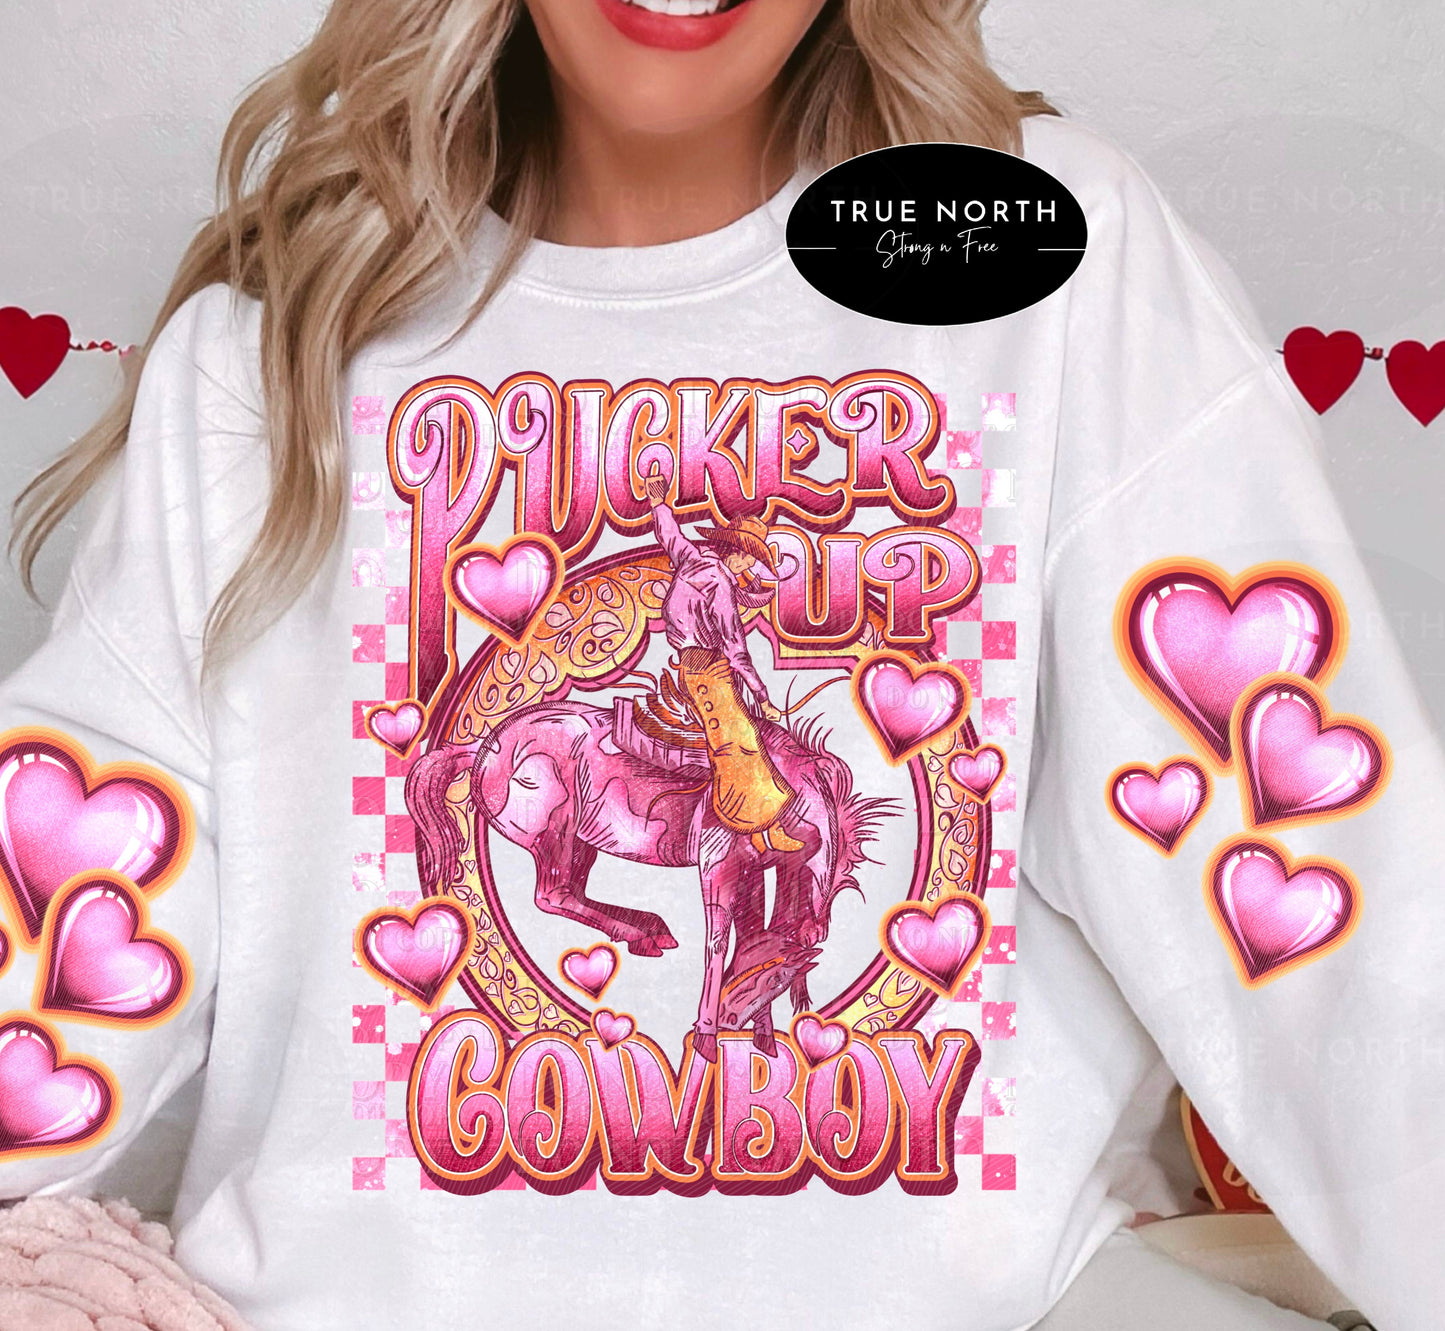 Sweatshirt Or T-Shirt  Valentines Pucker Up Cowboy Sleeve offered